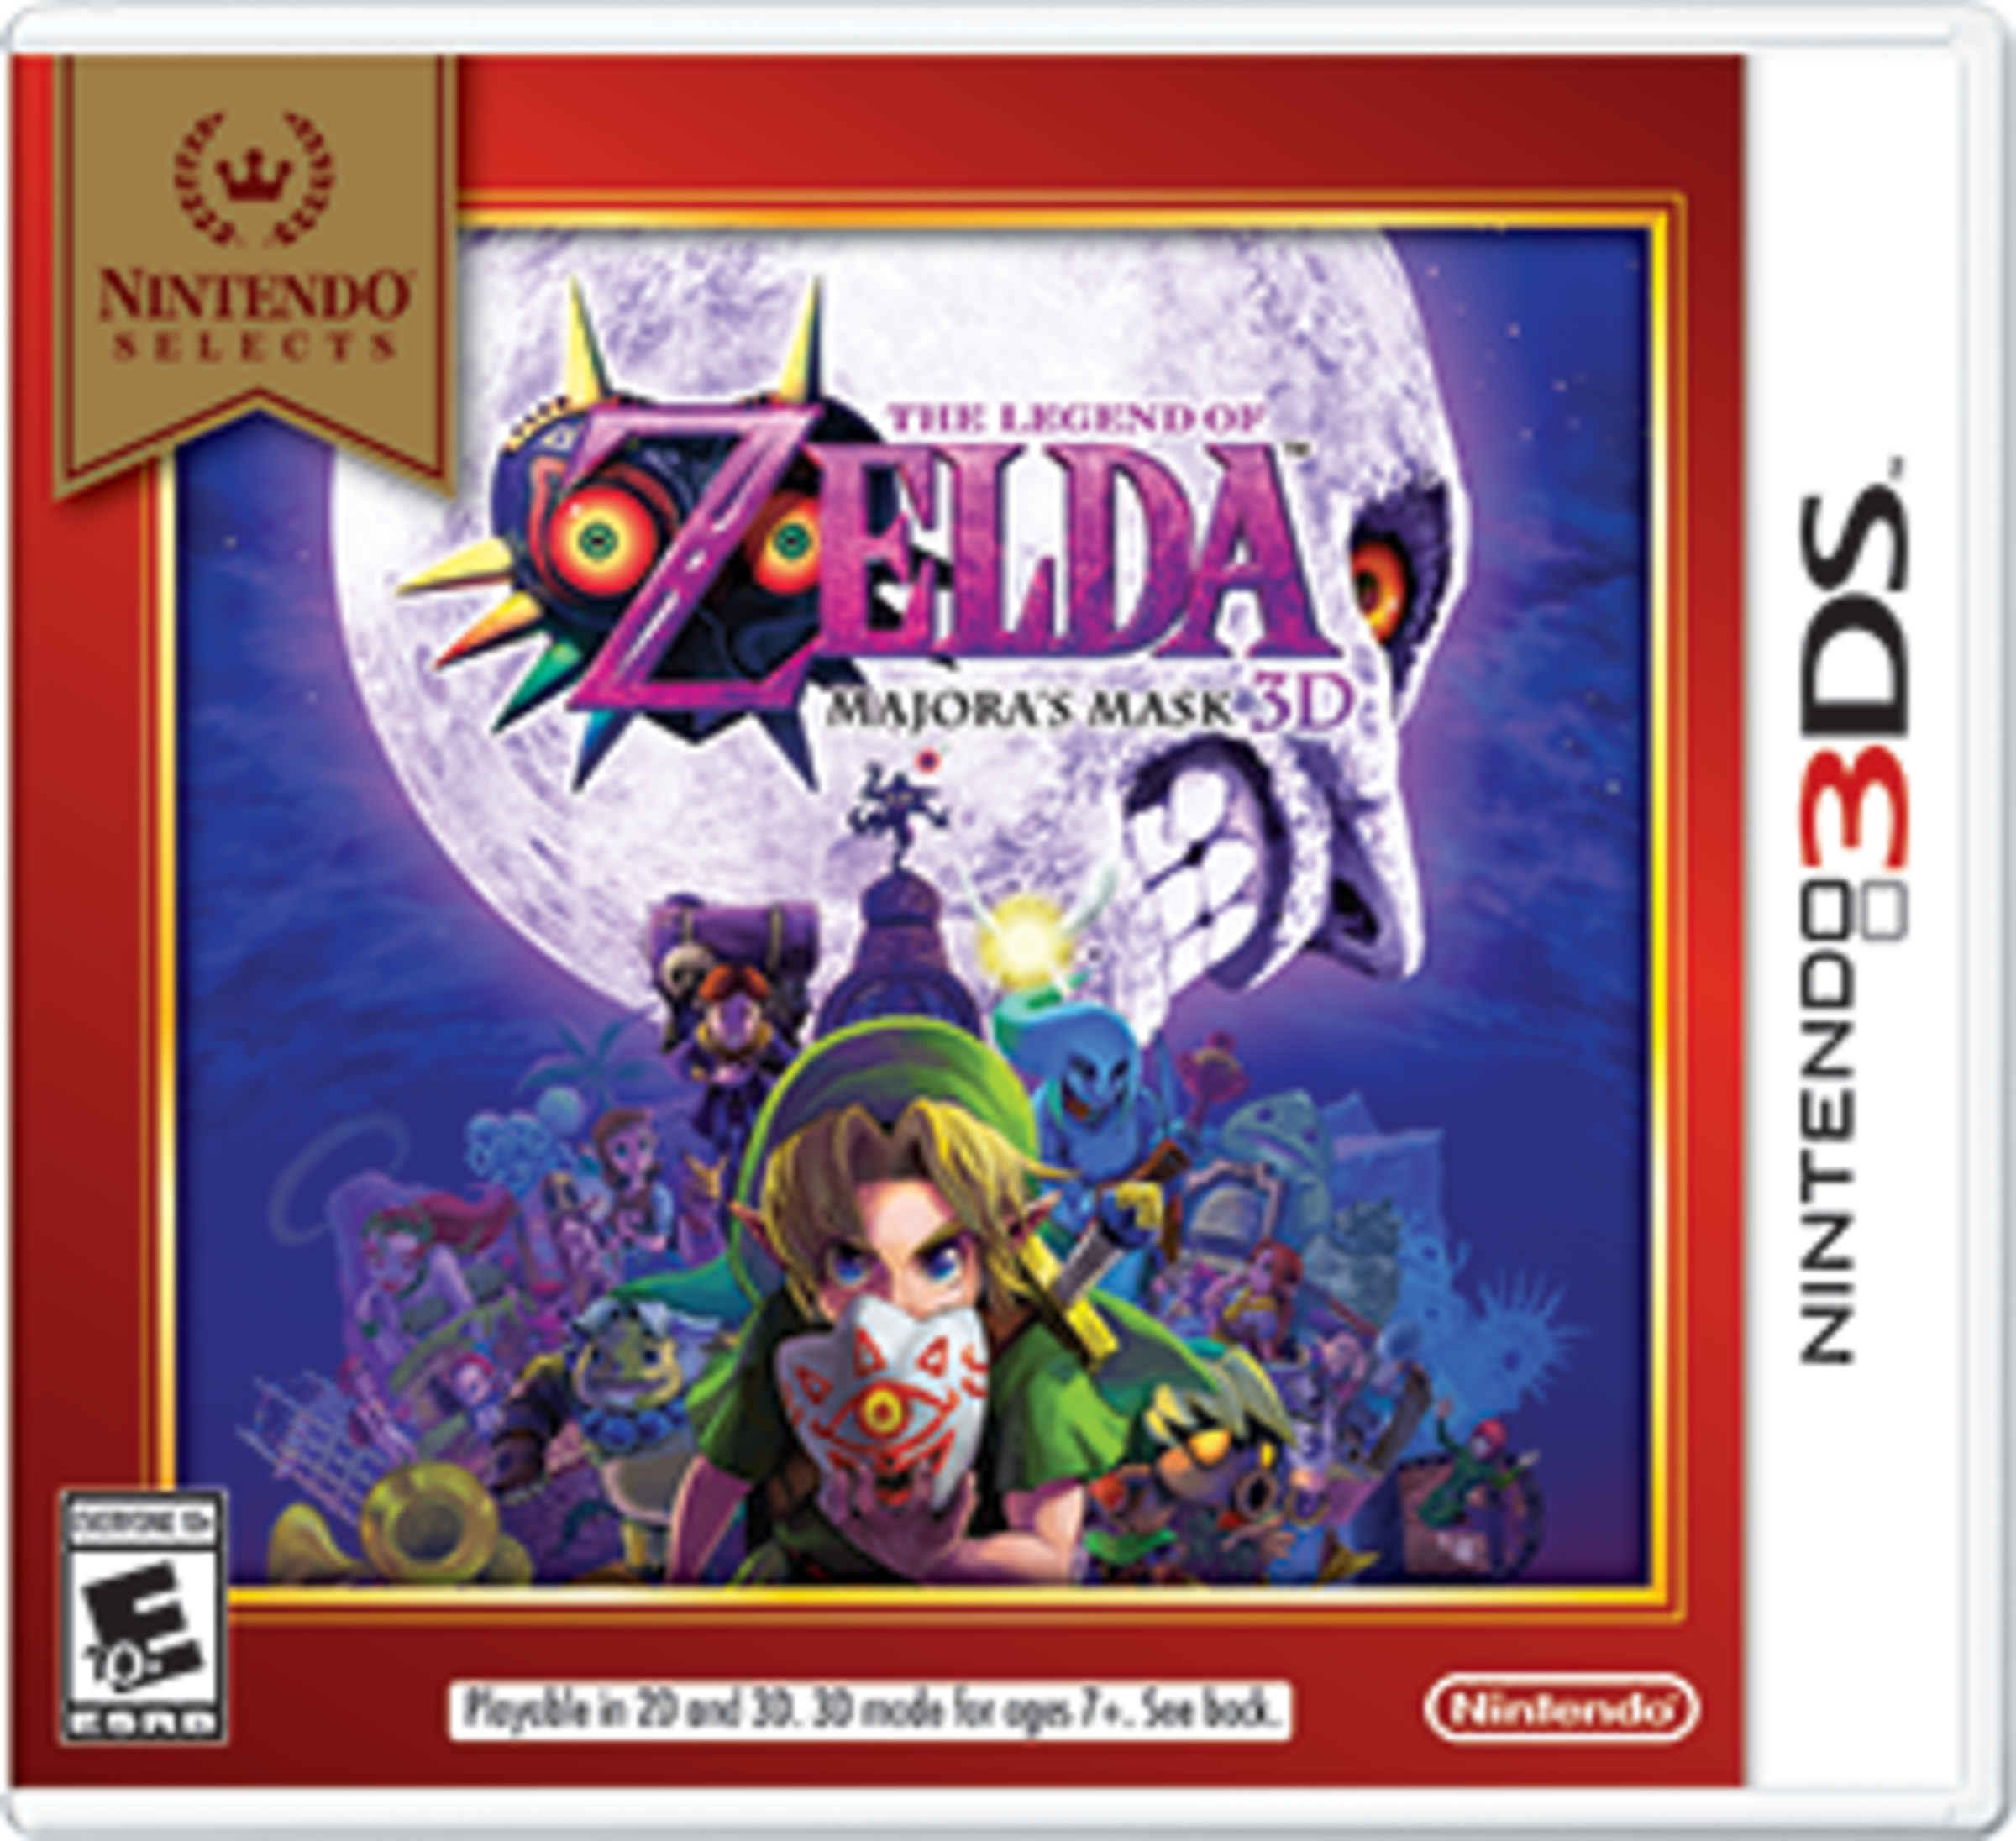 The of Zelda: Mask 3D for 3DS - Nintendo Official